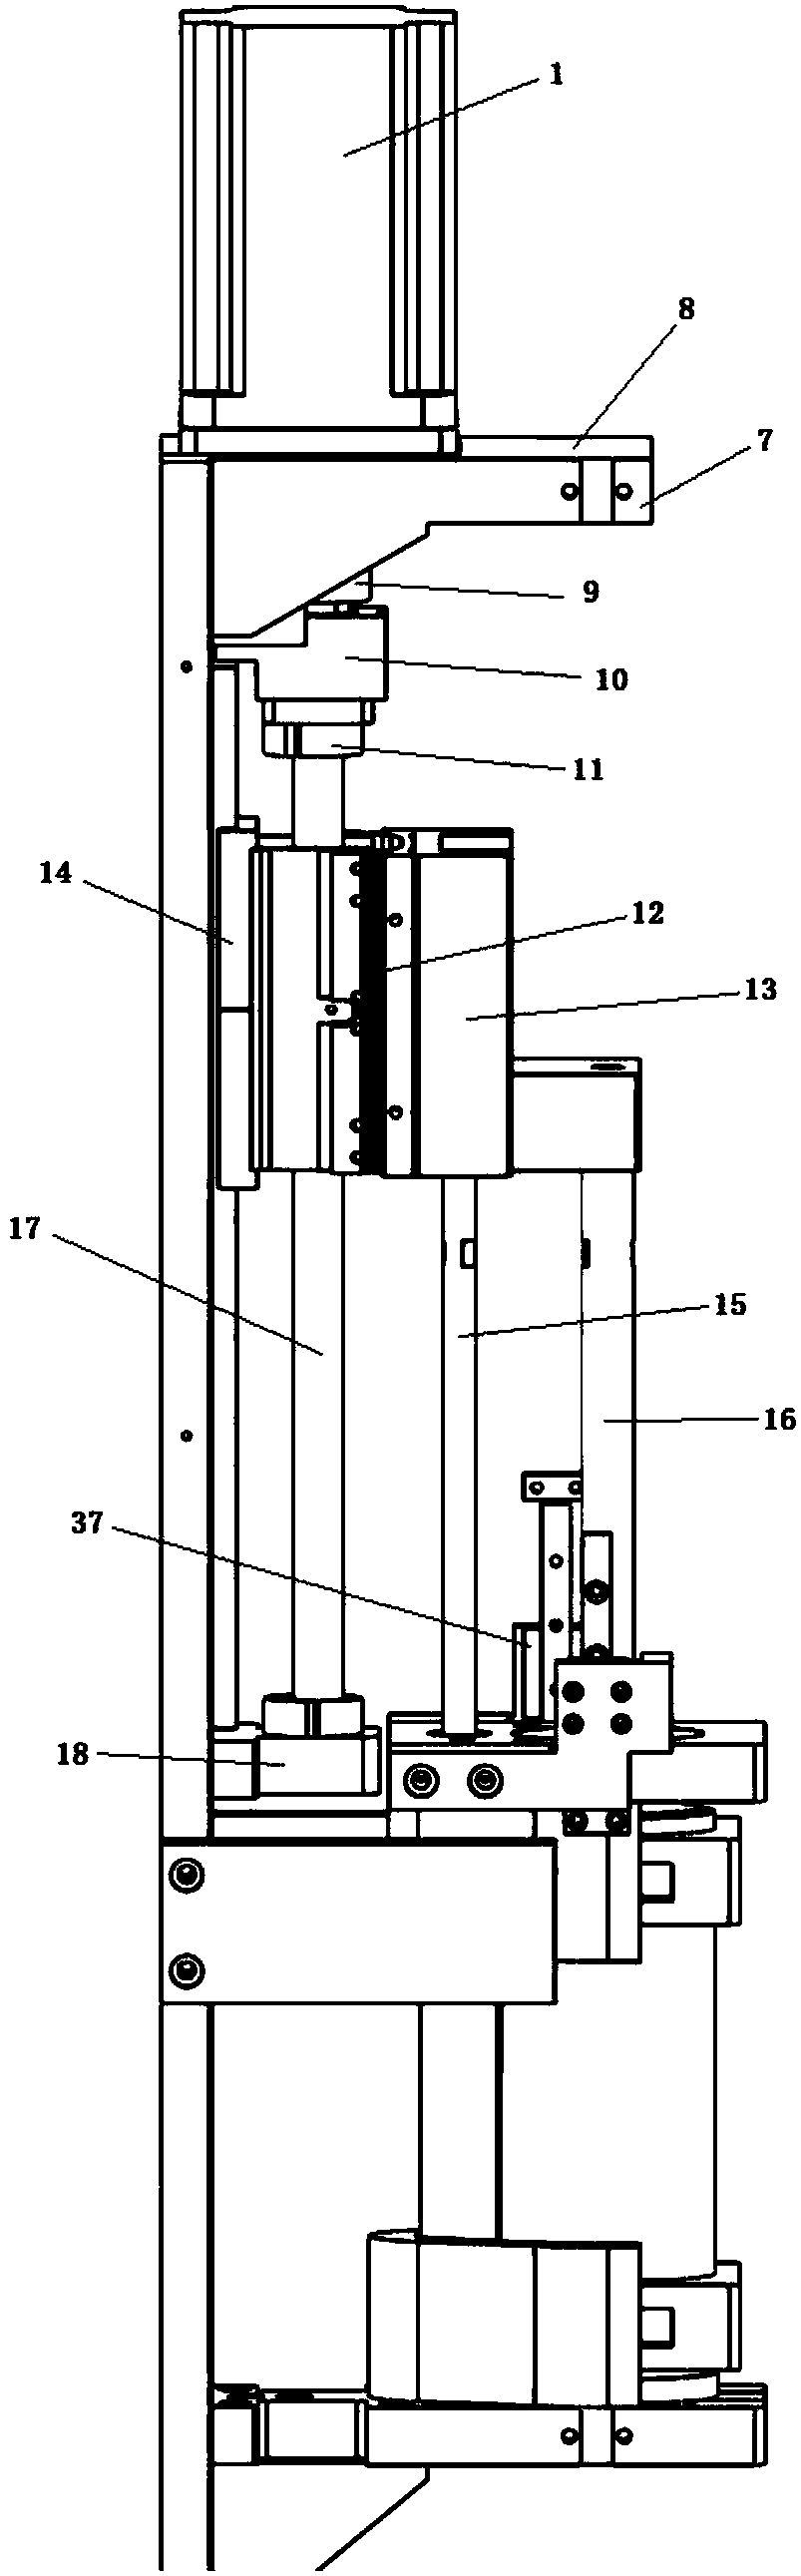 A three-axis Cartesian coordinate large-capacity dispensing machine